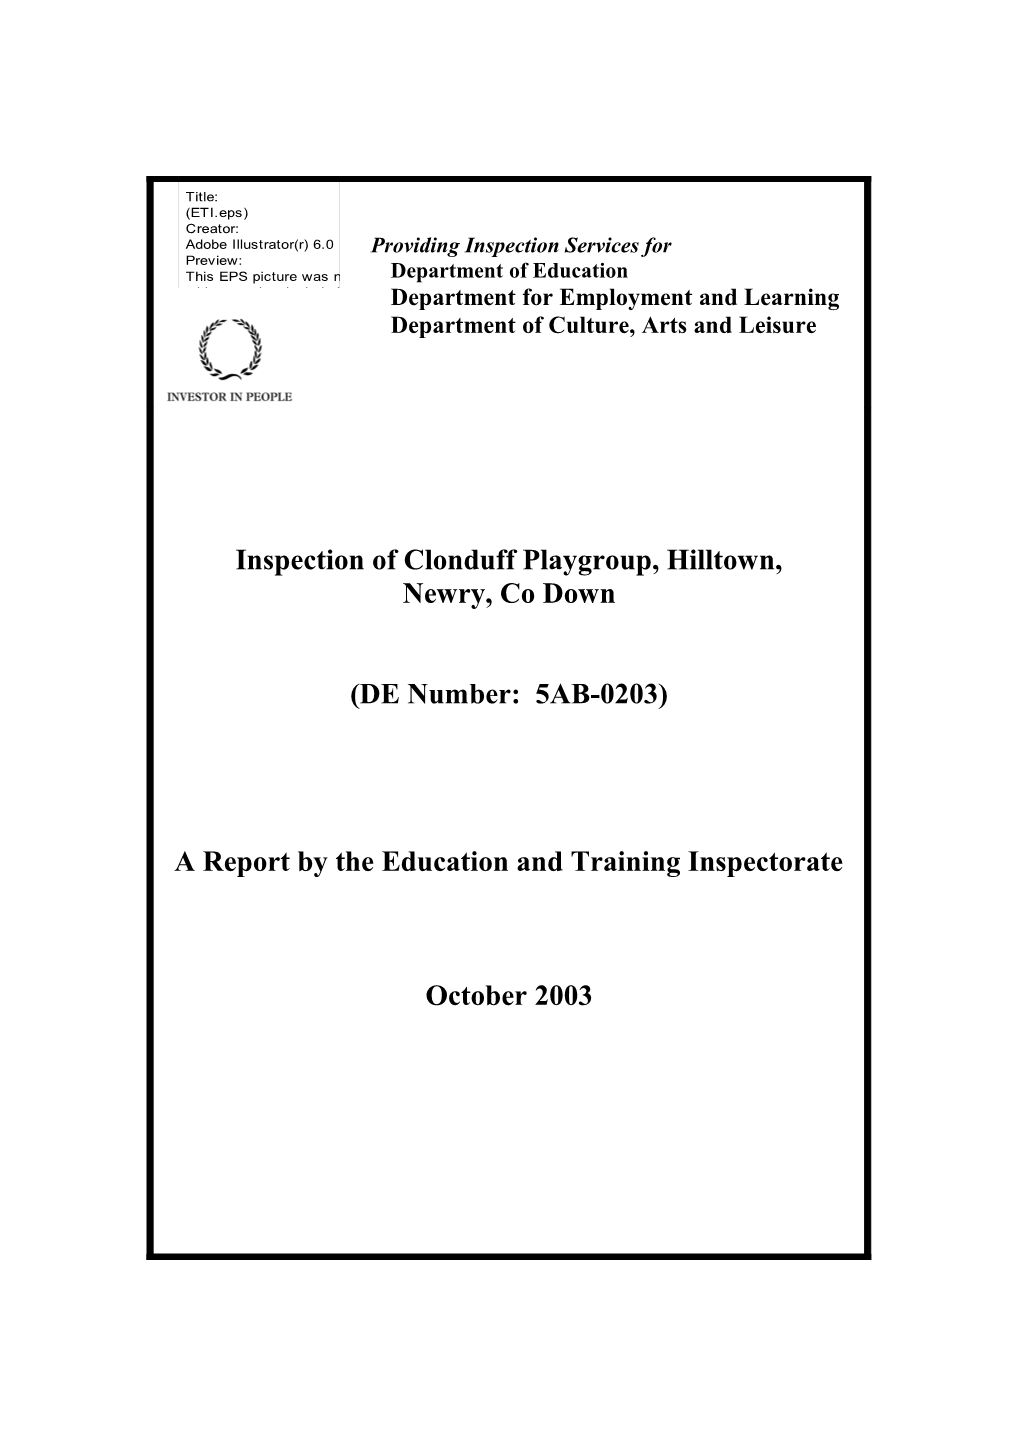 Report on the Inspection of Clonduff Pre-School, Hilltown, Co